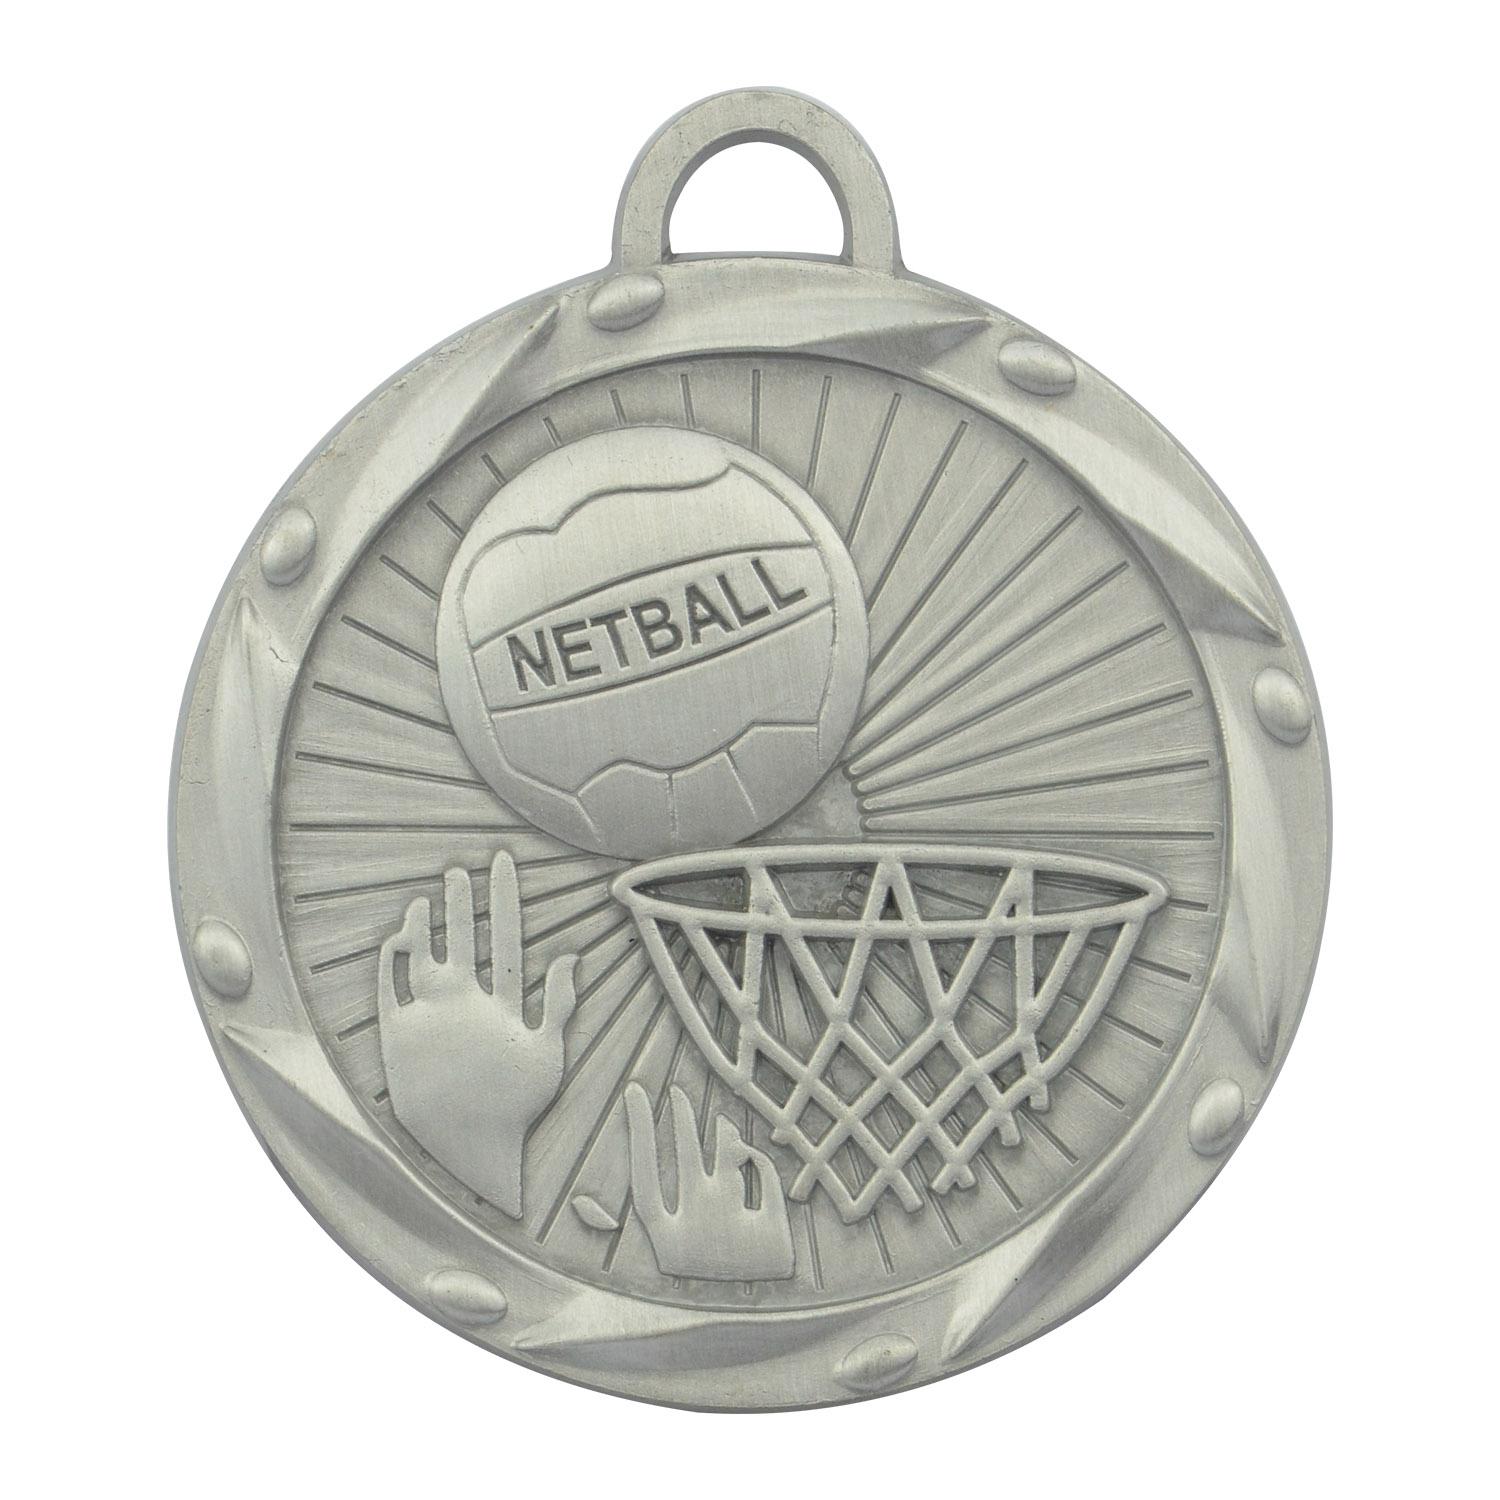 Zawod önümçiligi ýadygärlik altyn kümüş mis mis metal futbol woleýbol basketbol ýörite sport medallary medaly (1)